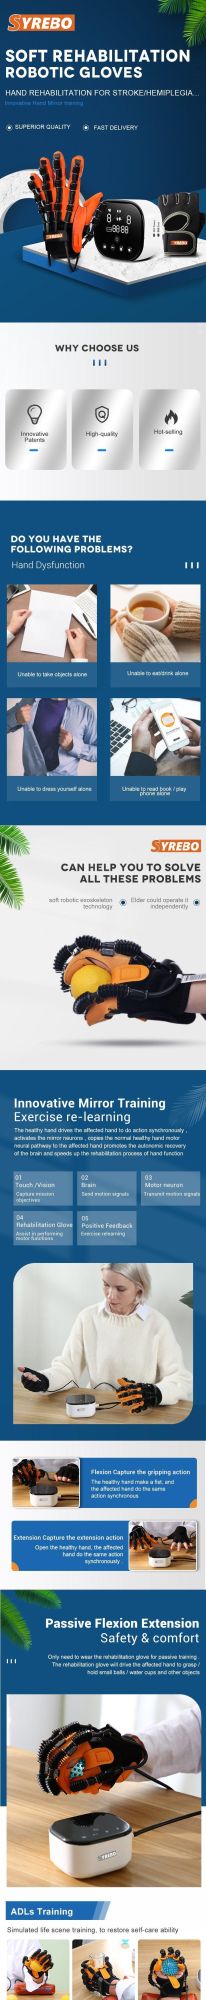 Rehabilitation Therapy Supplies Stroke Rehabilitation Exercises Rehabilitation Robot Gloves